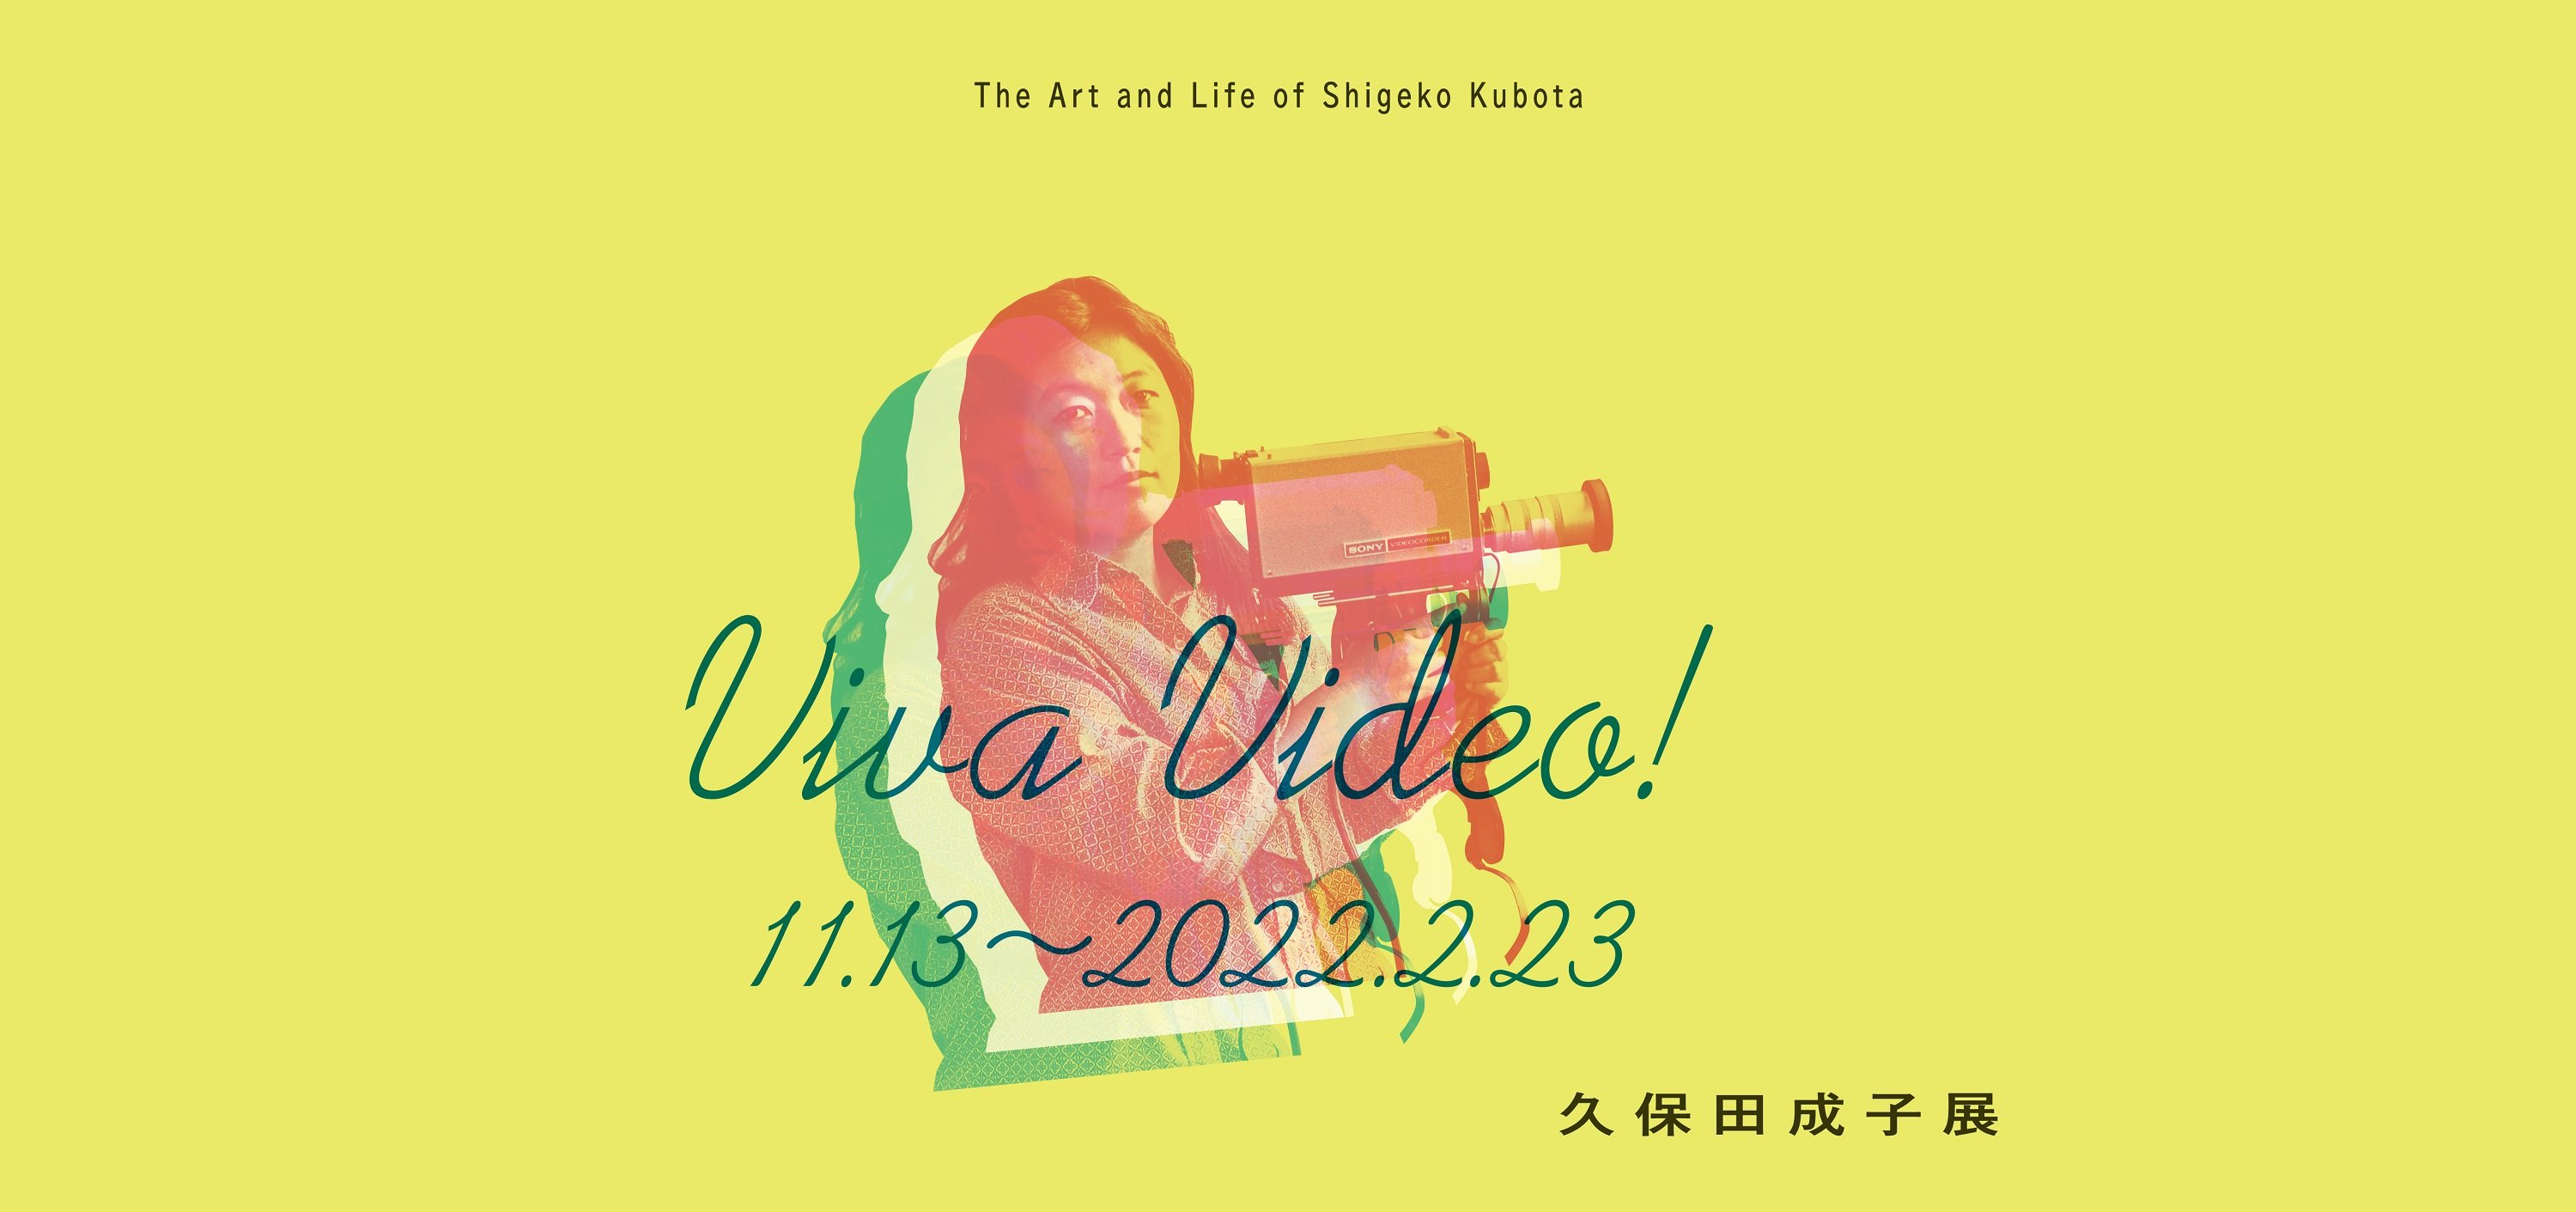 Viva Video! Shigeko Kubota